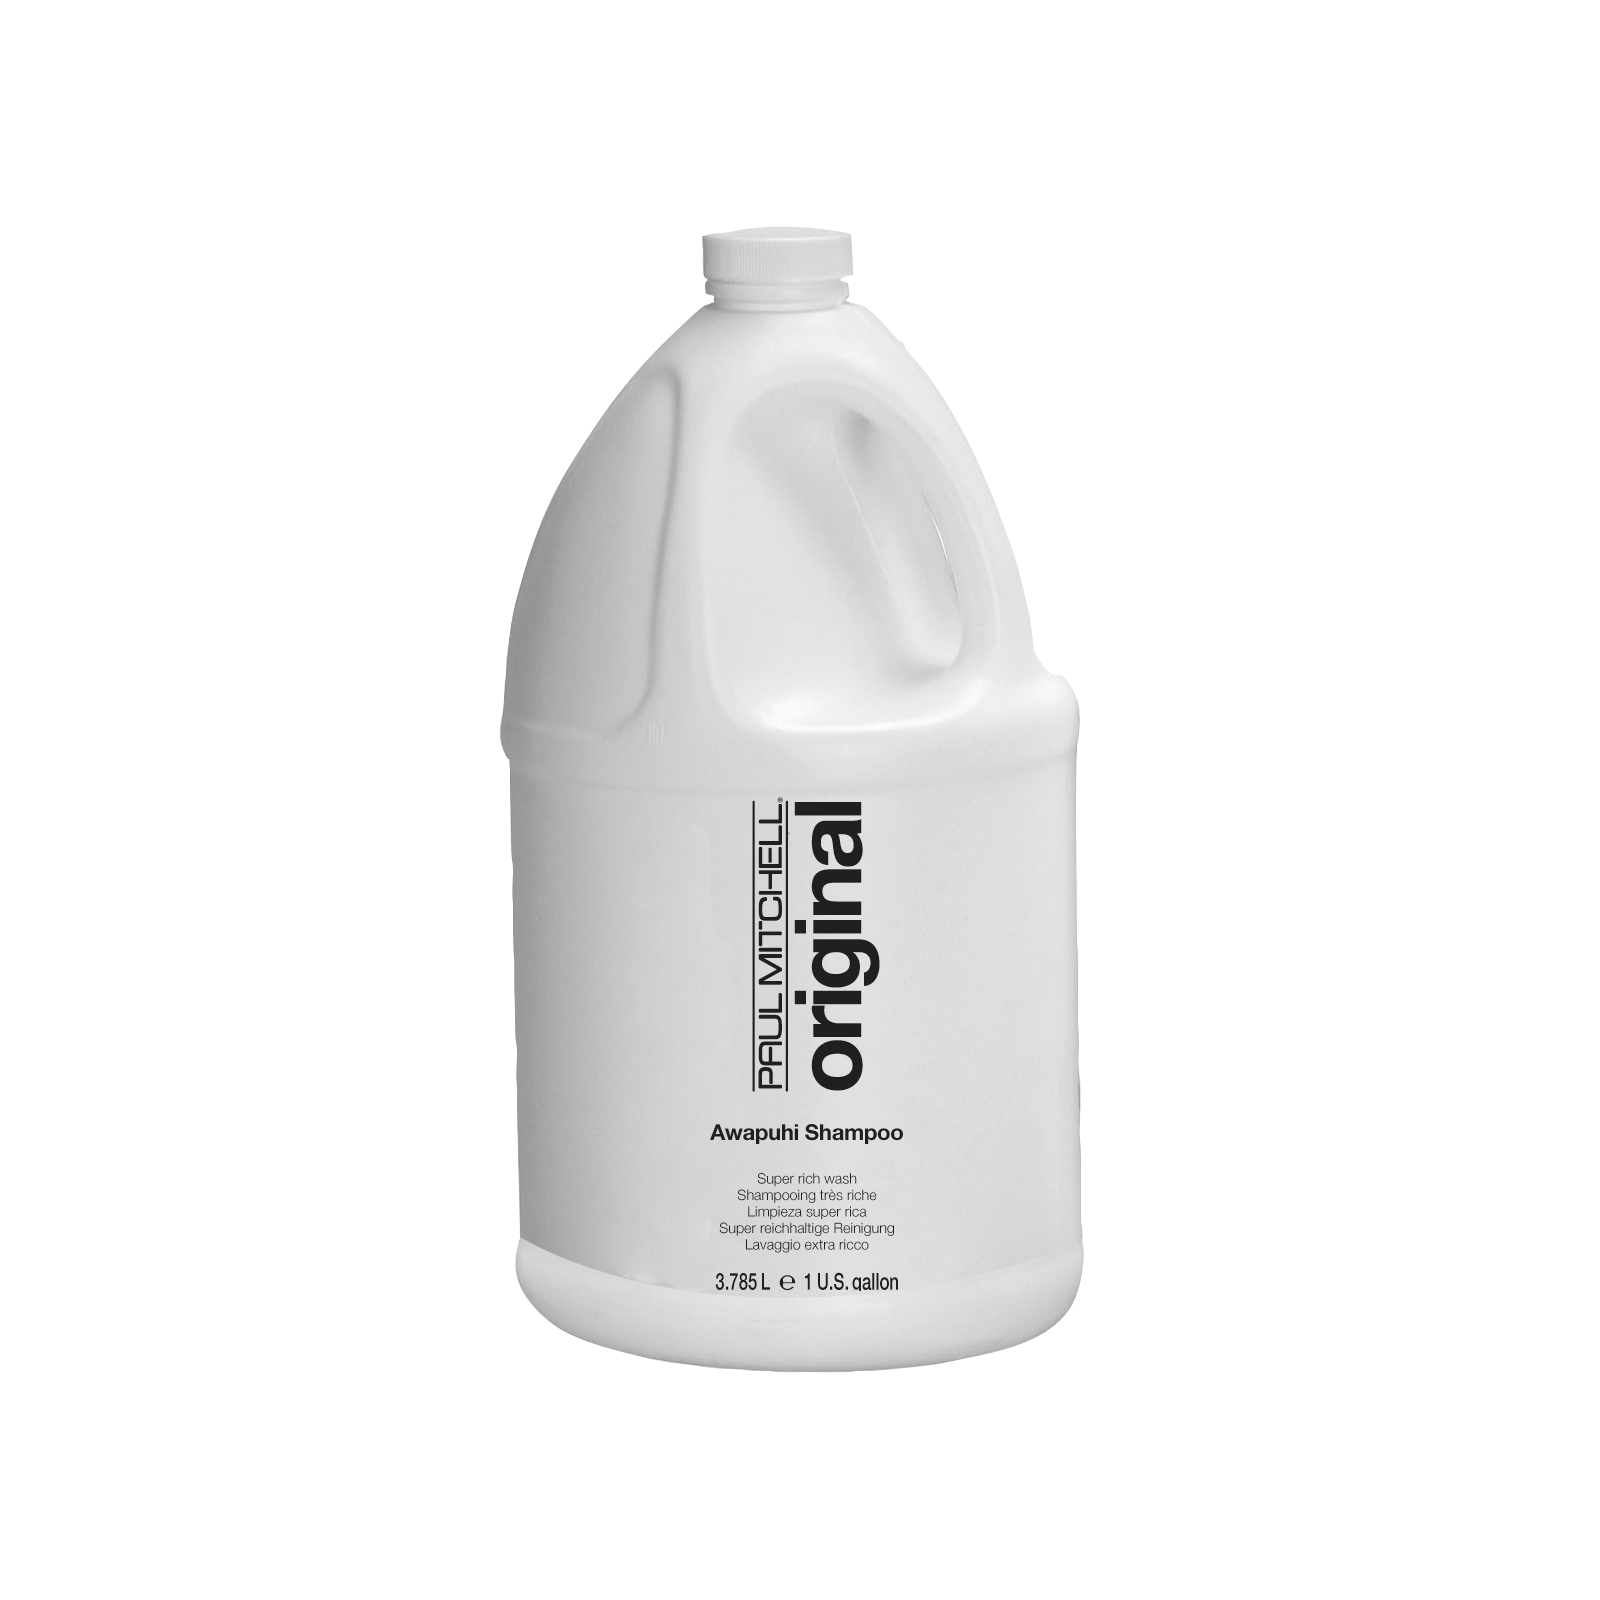 ORIGINAL - Awapuhi Shampoo Gallon